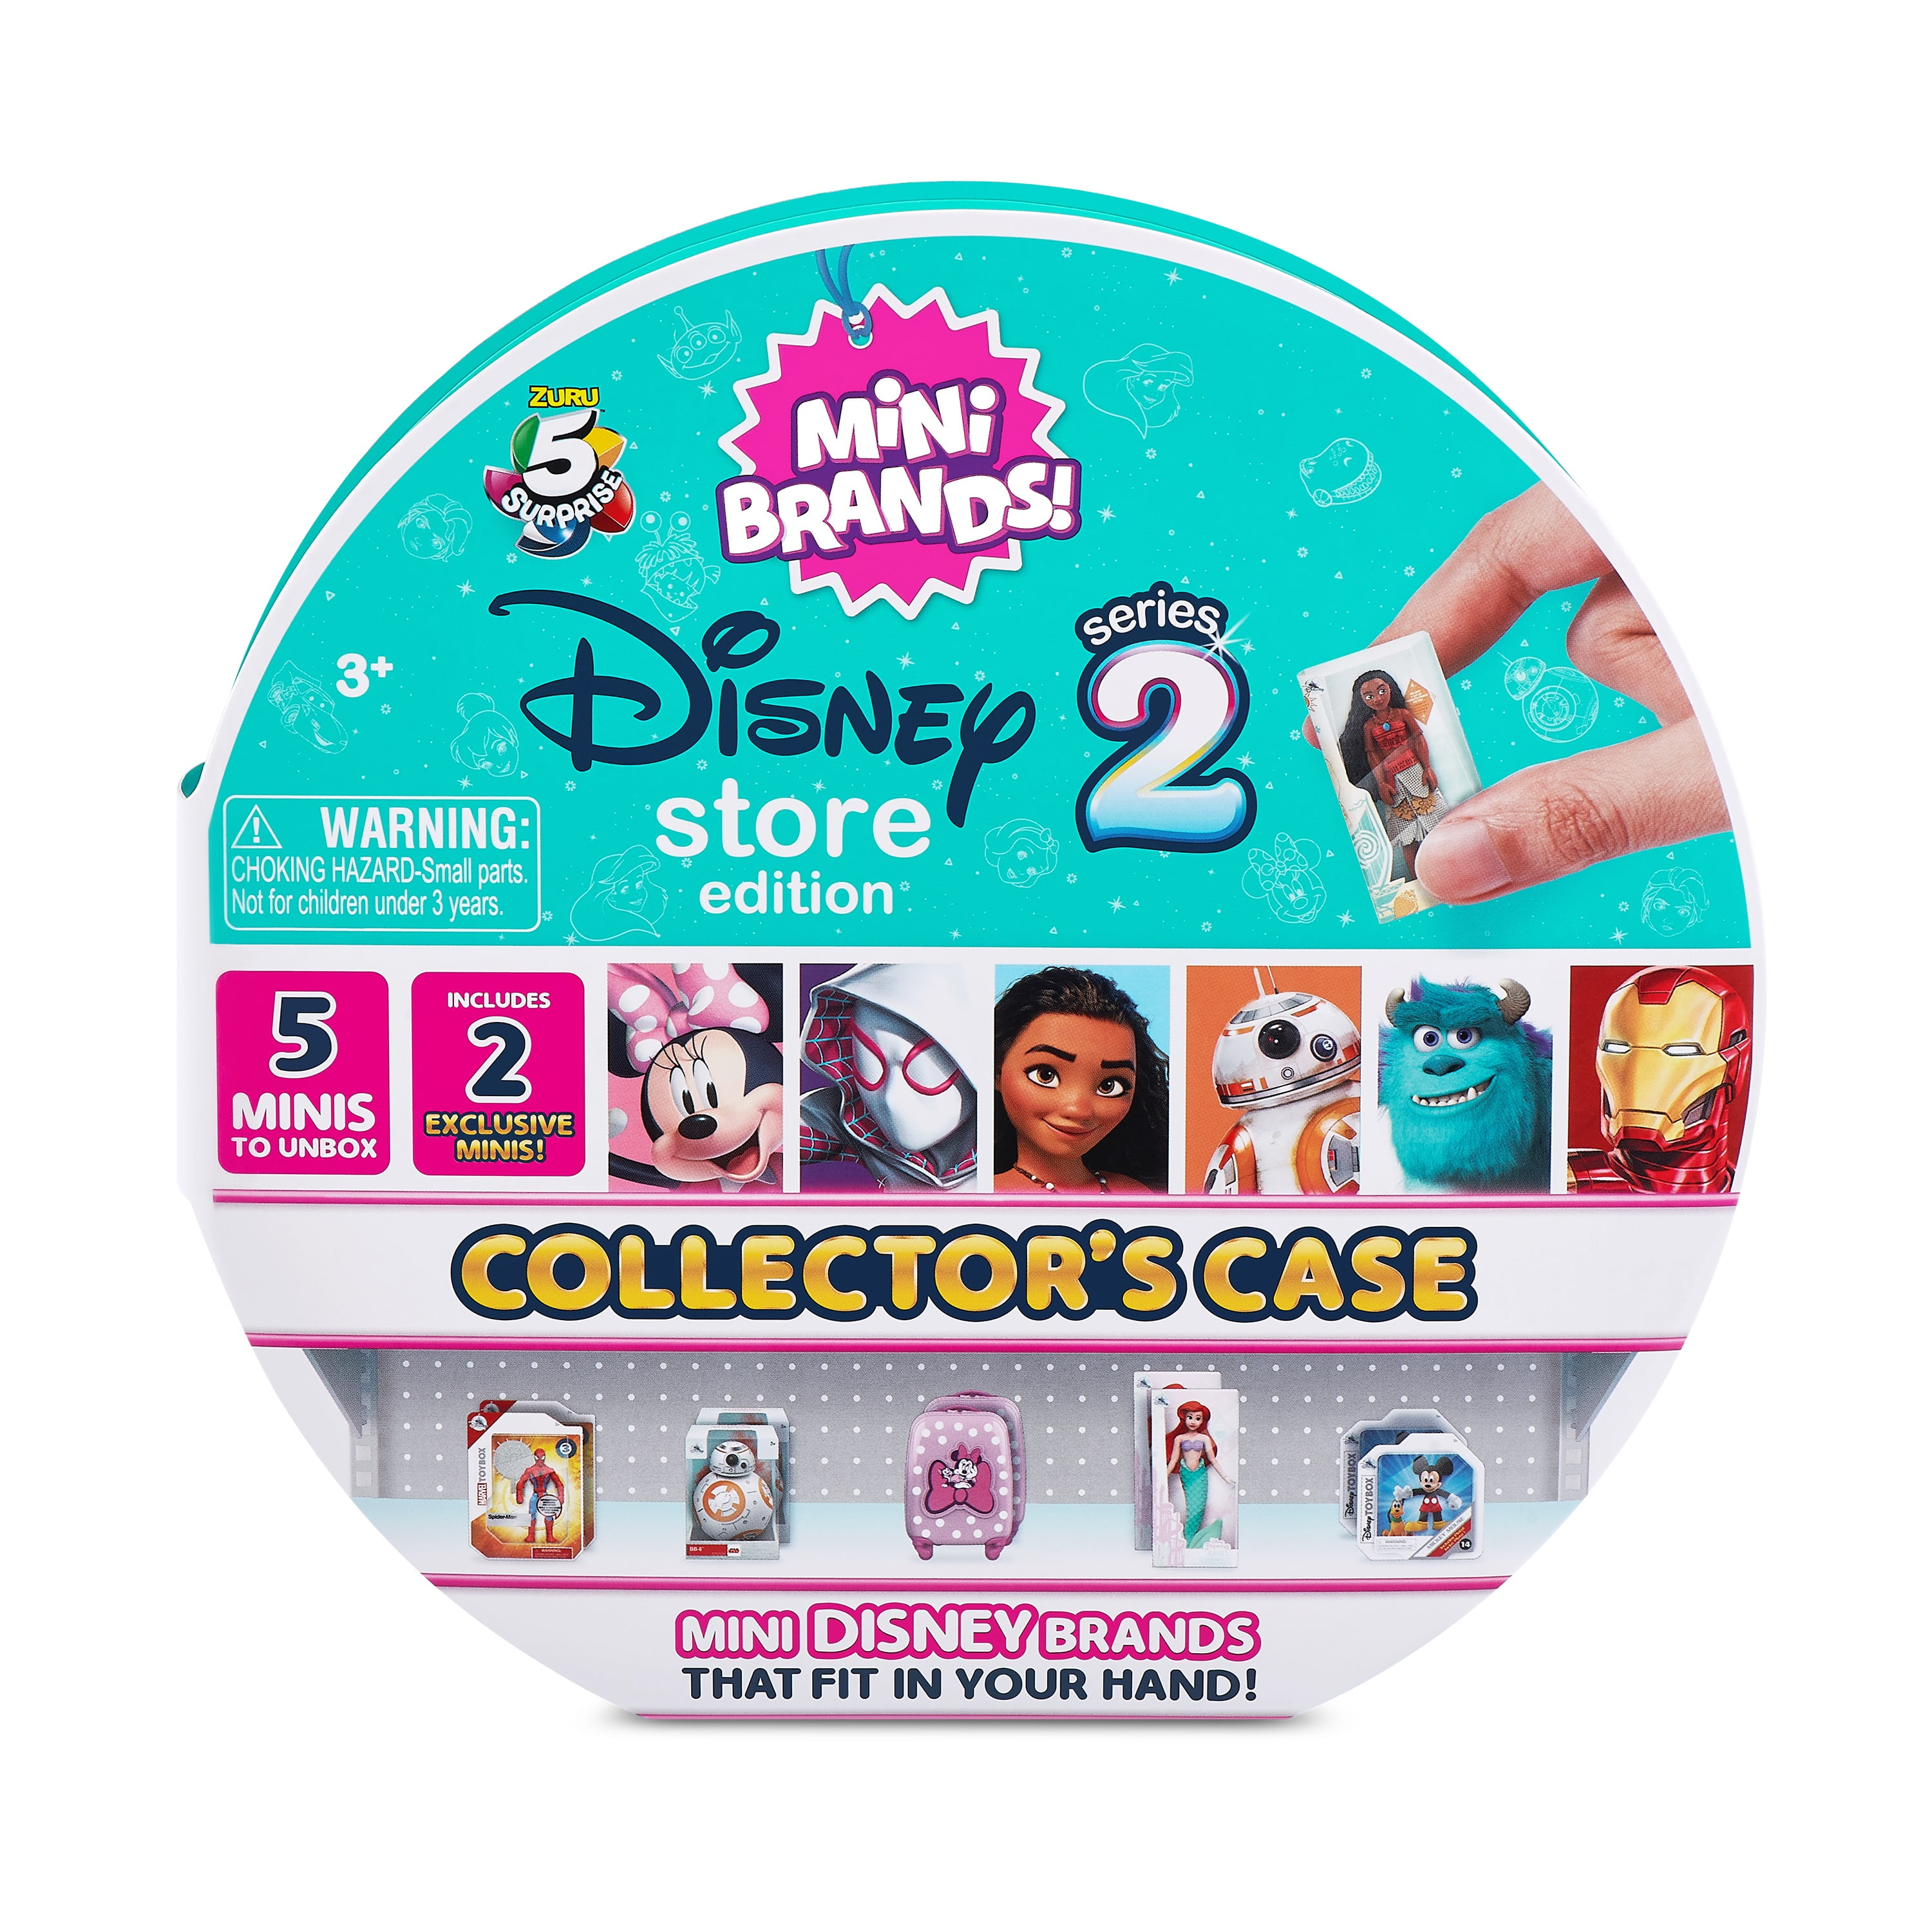 Mini Brands Disney Store Series 2 Collector's Case by ZURU Novelty & Gag  Toy 